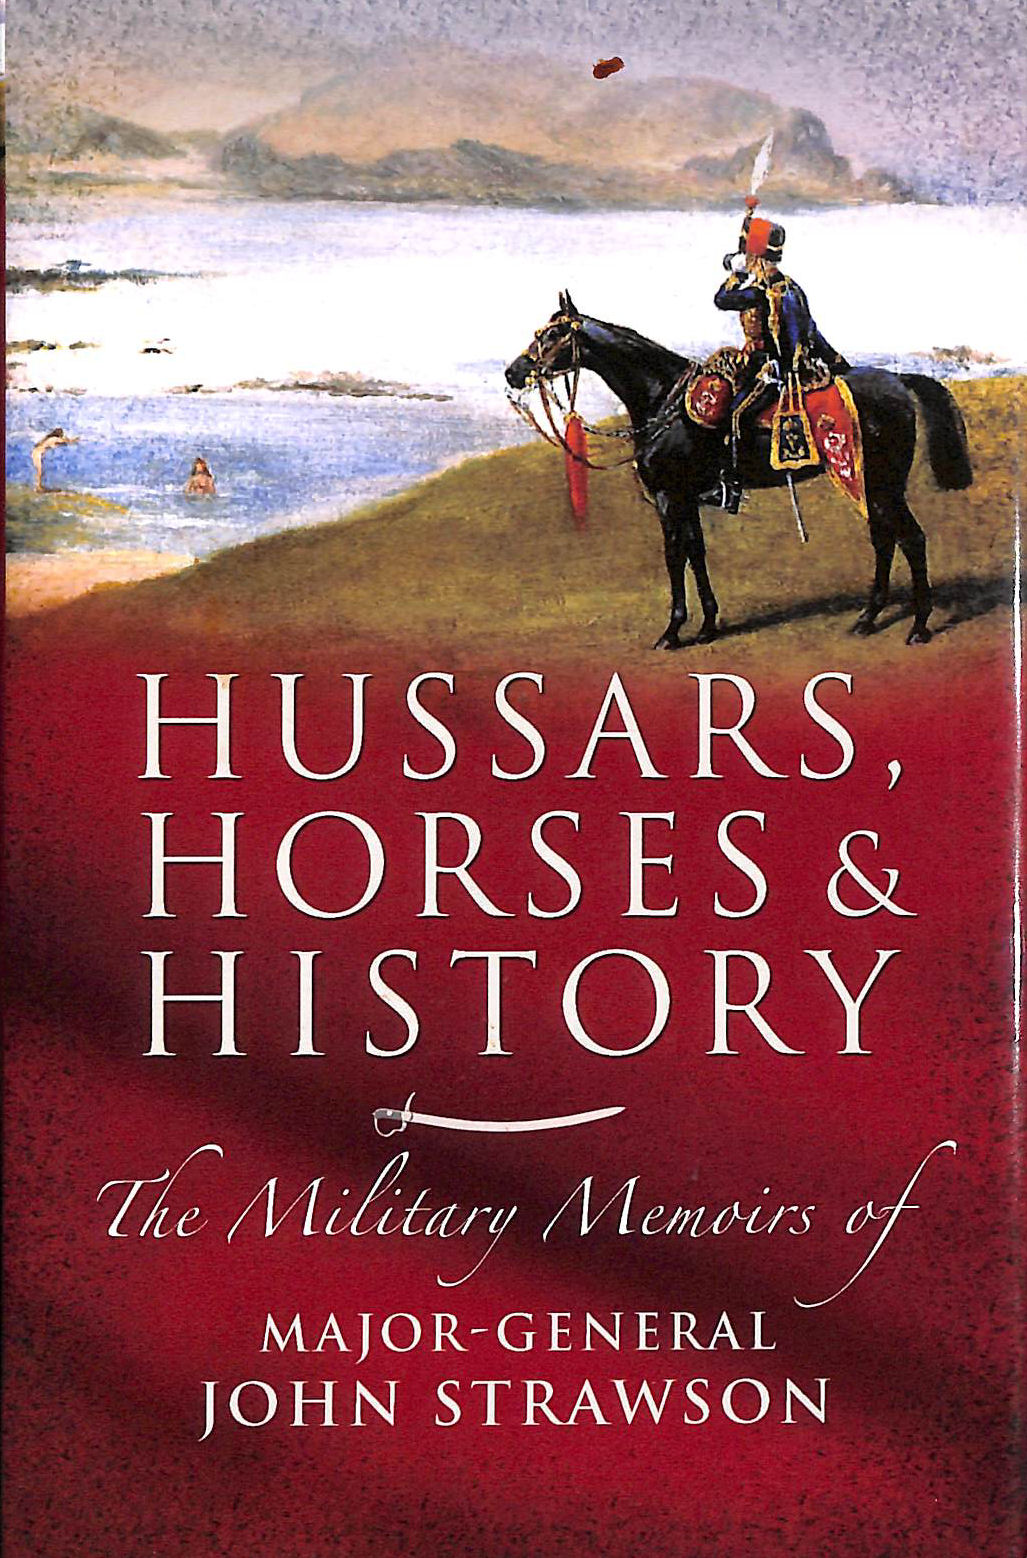 STRAWSON, JOHN - Hussars Horses & History: The Military Memoirs of Major-General John Strawson